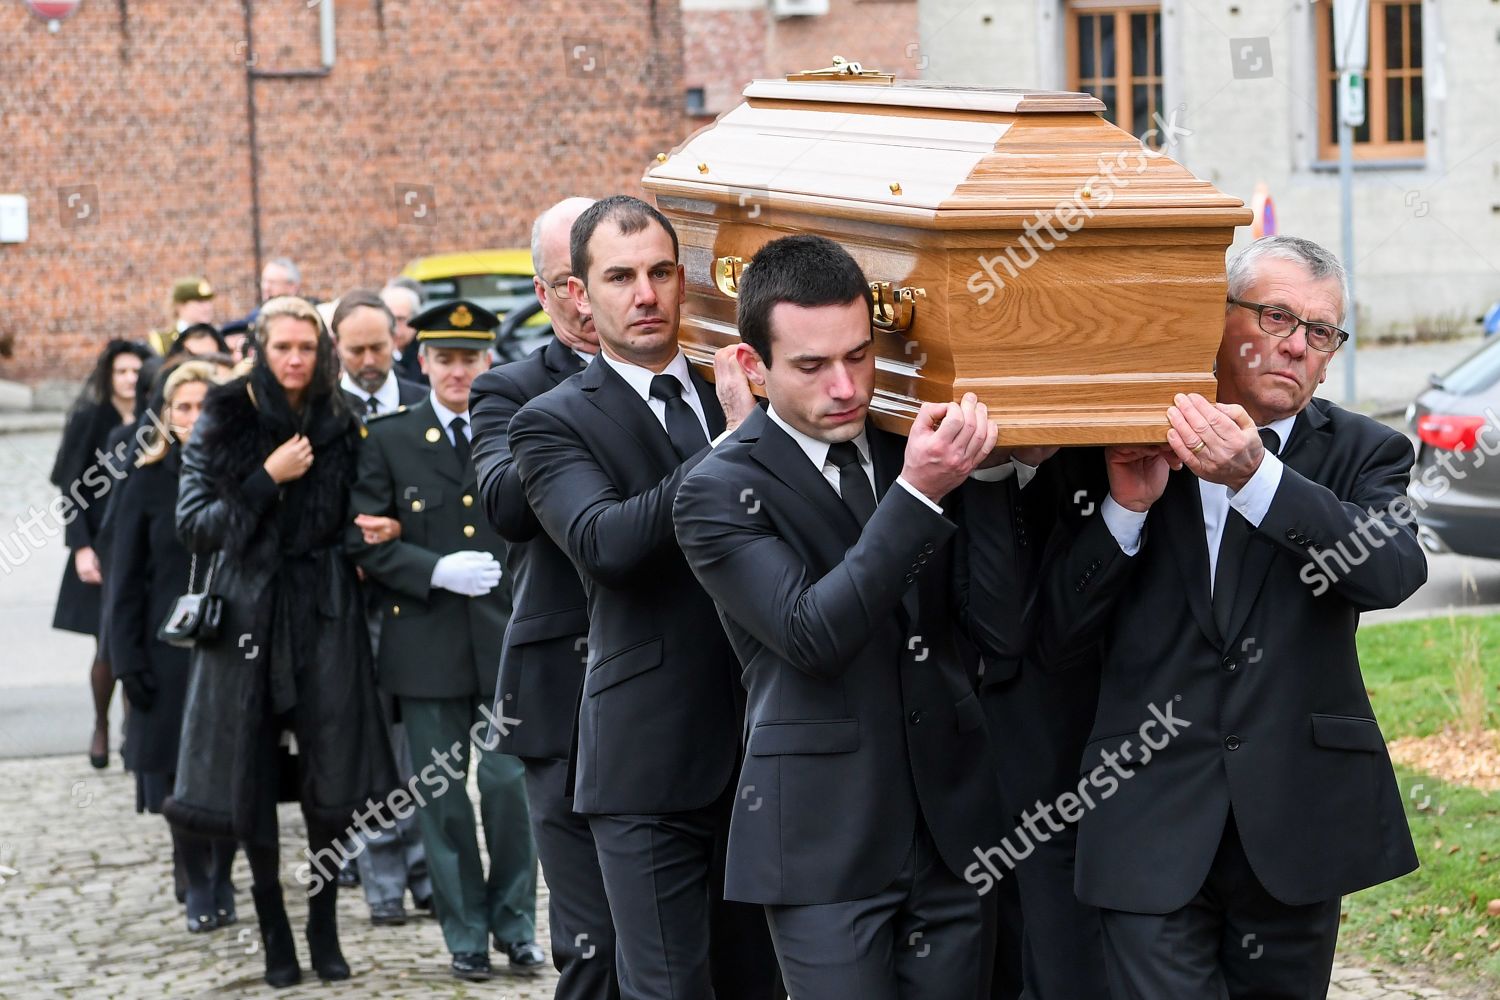 funeral-of-philippe-de-lannoy-anvaing-belgium-shutterstock-editorial-10063926a.jpg